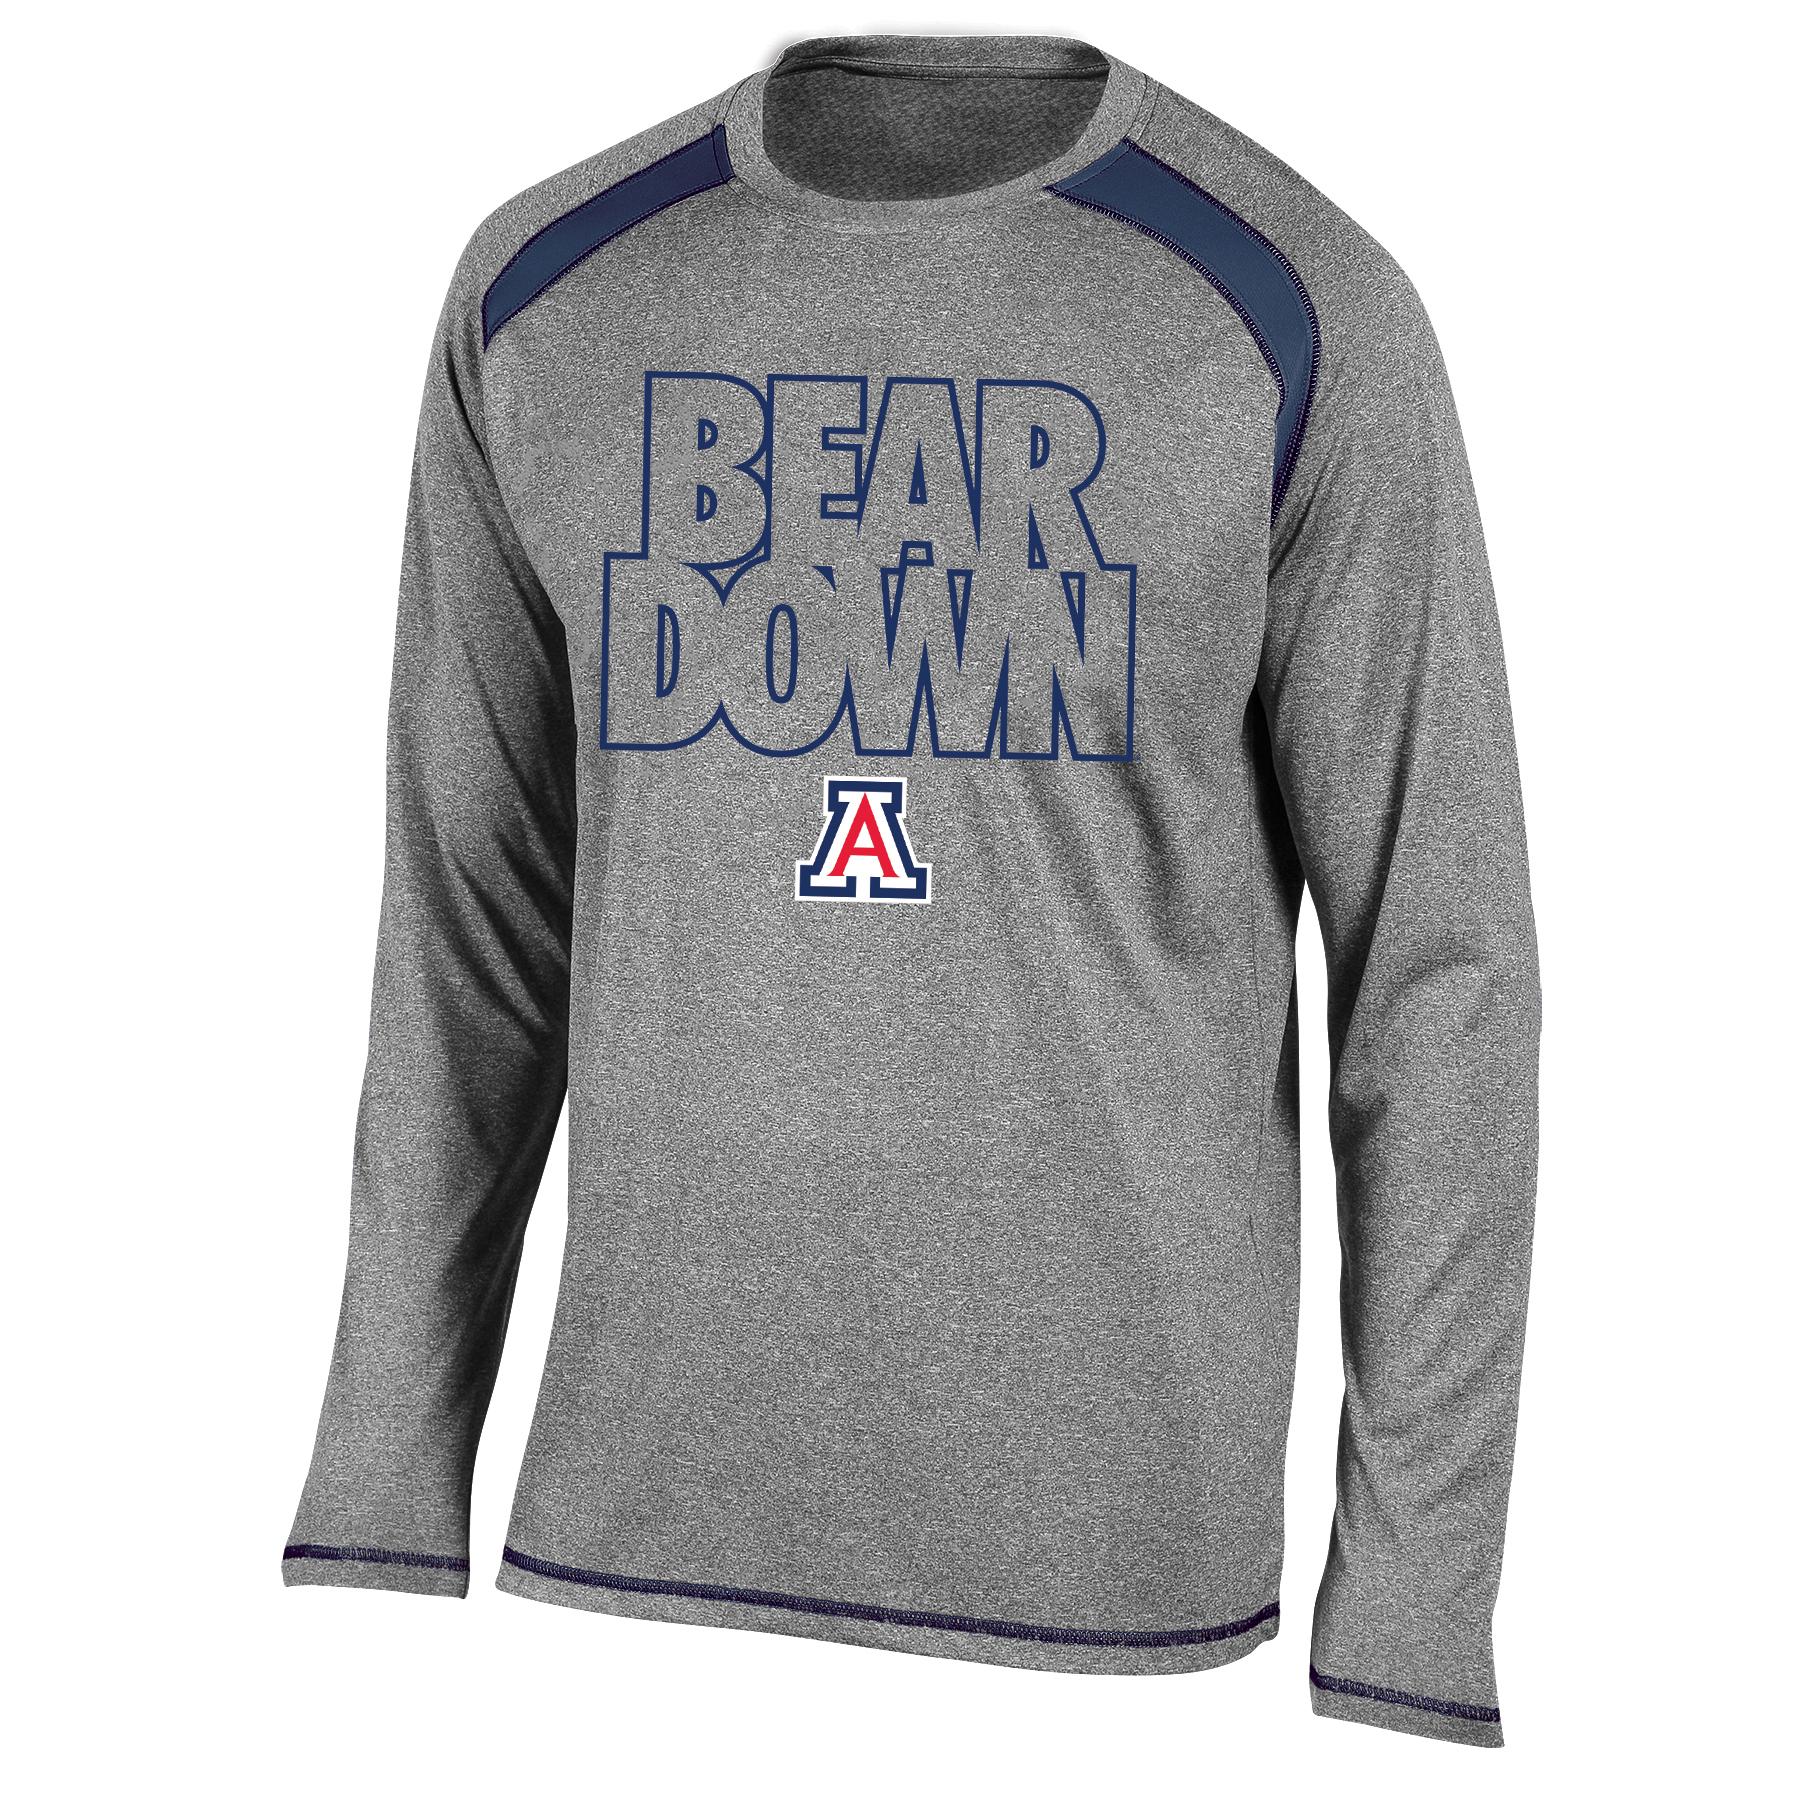 NCAA Men's Big & Tall Athletic Shirt - University of Arizona Wildcats